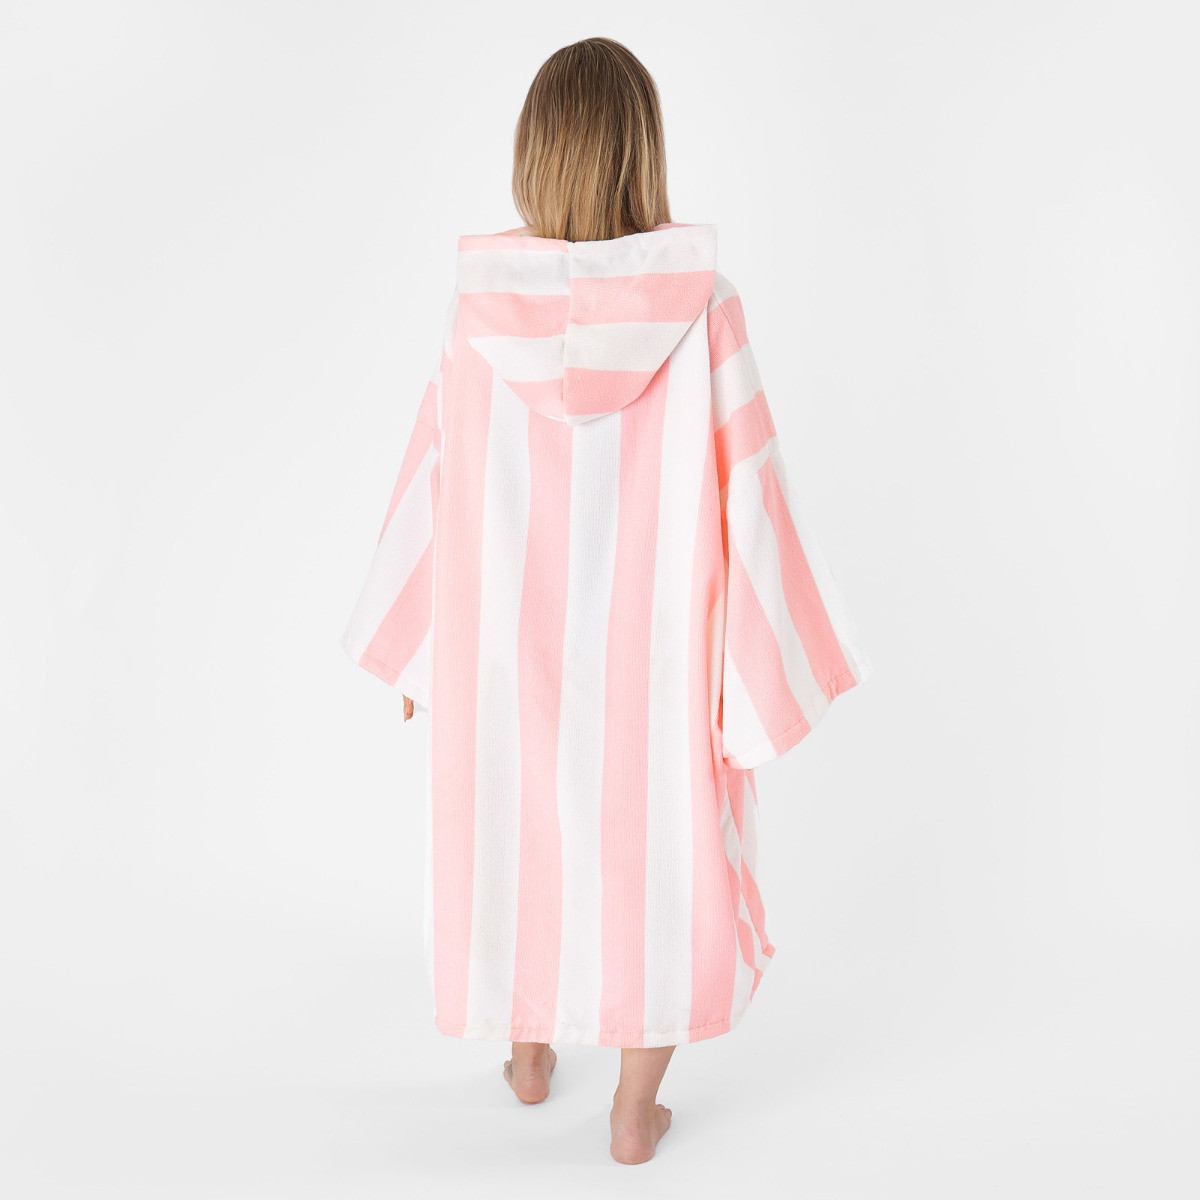 Dreamscene Stripe Print Poncho Oversized Changing Robe, Adults - Blush Pink>